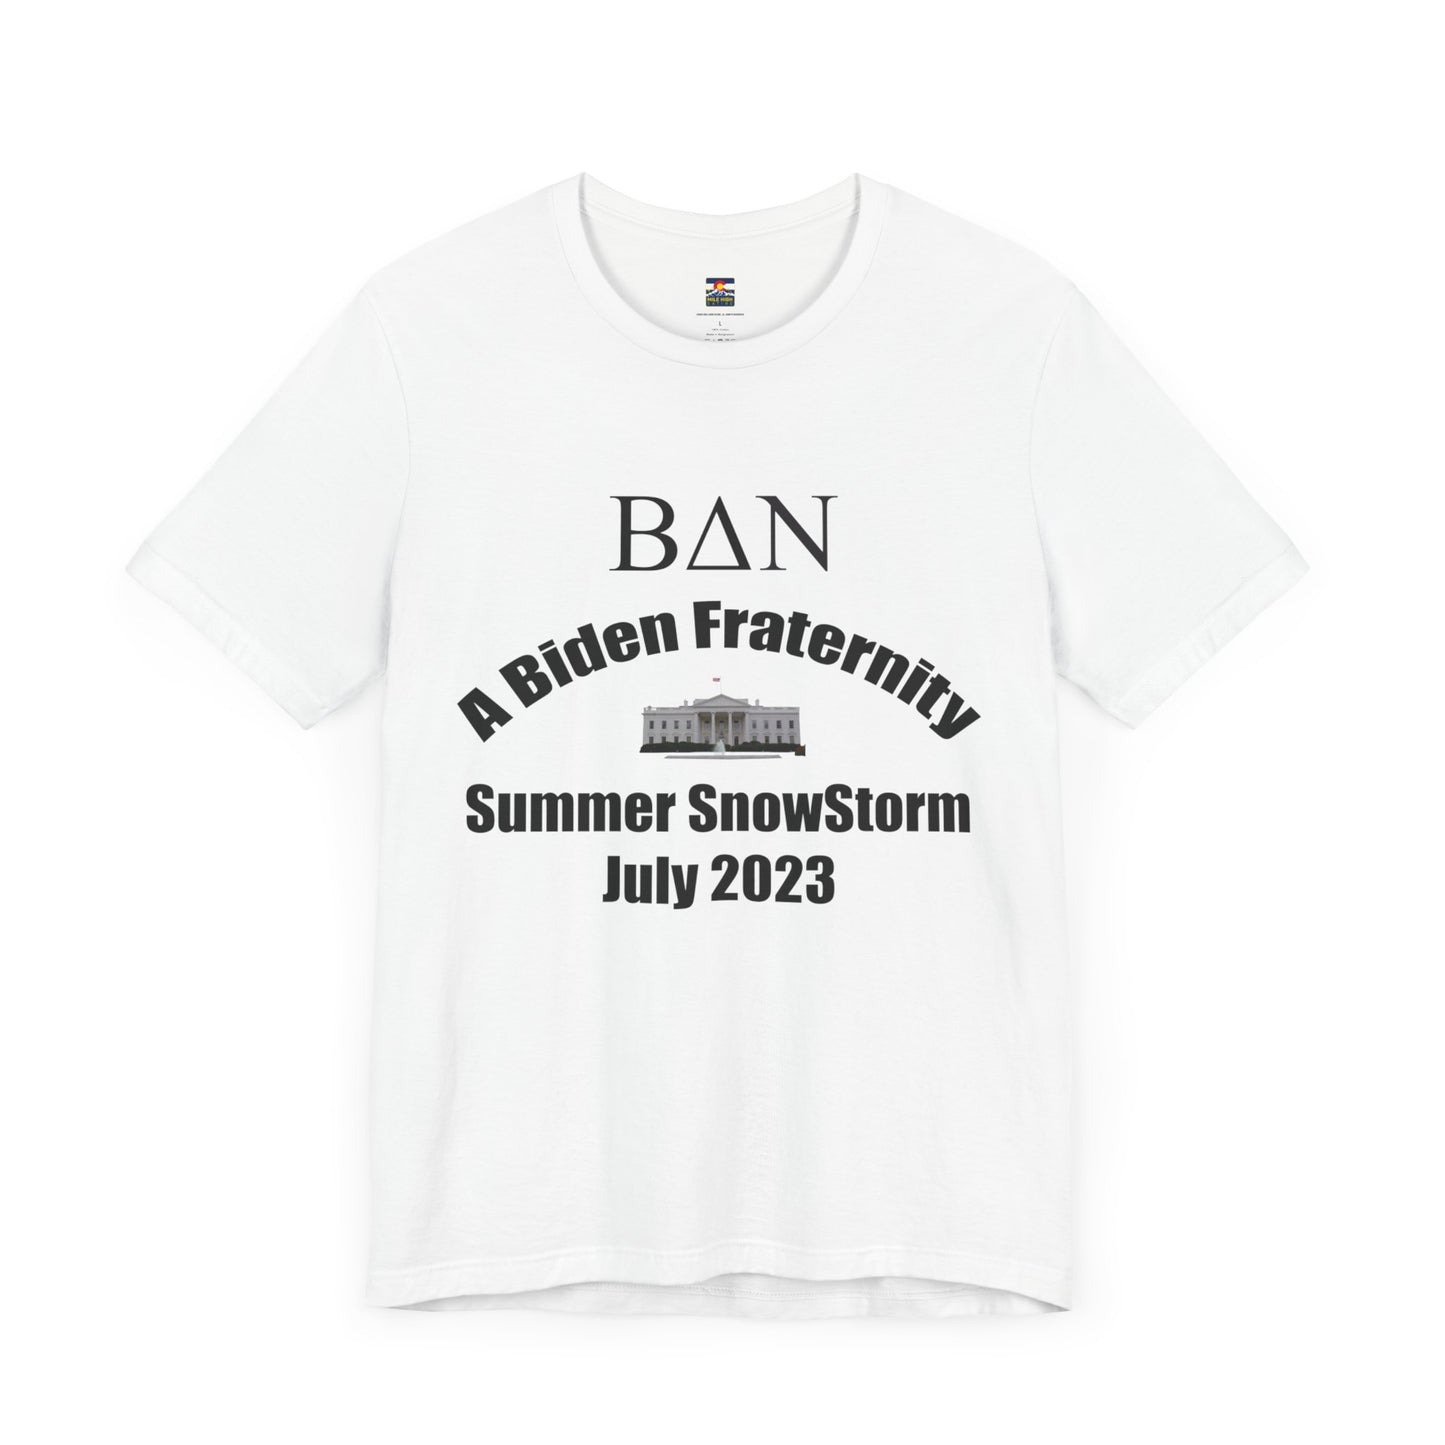 Biden Family Fraternity - Summer Snowstorm '23 T-Shirt